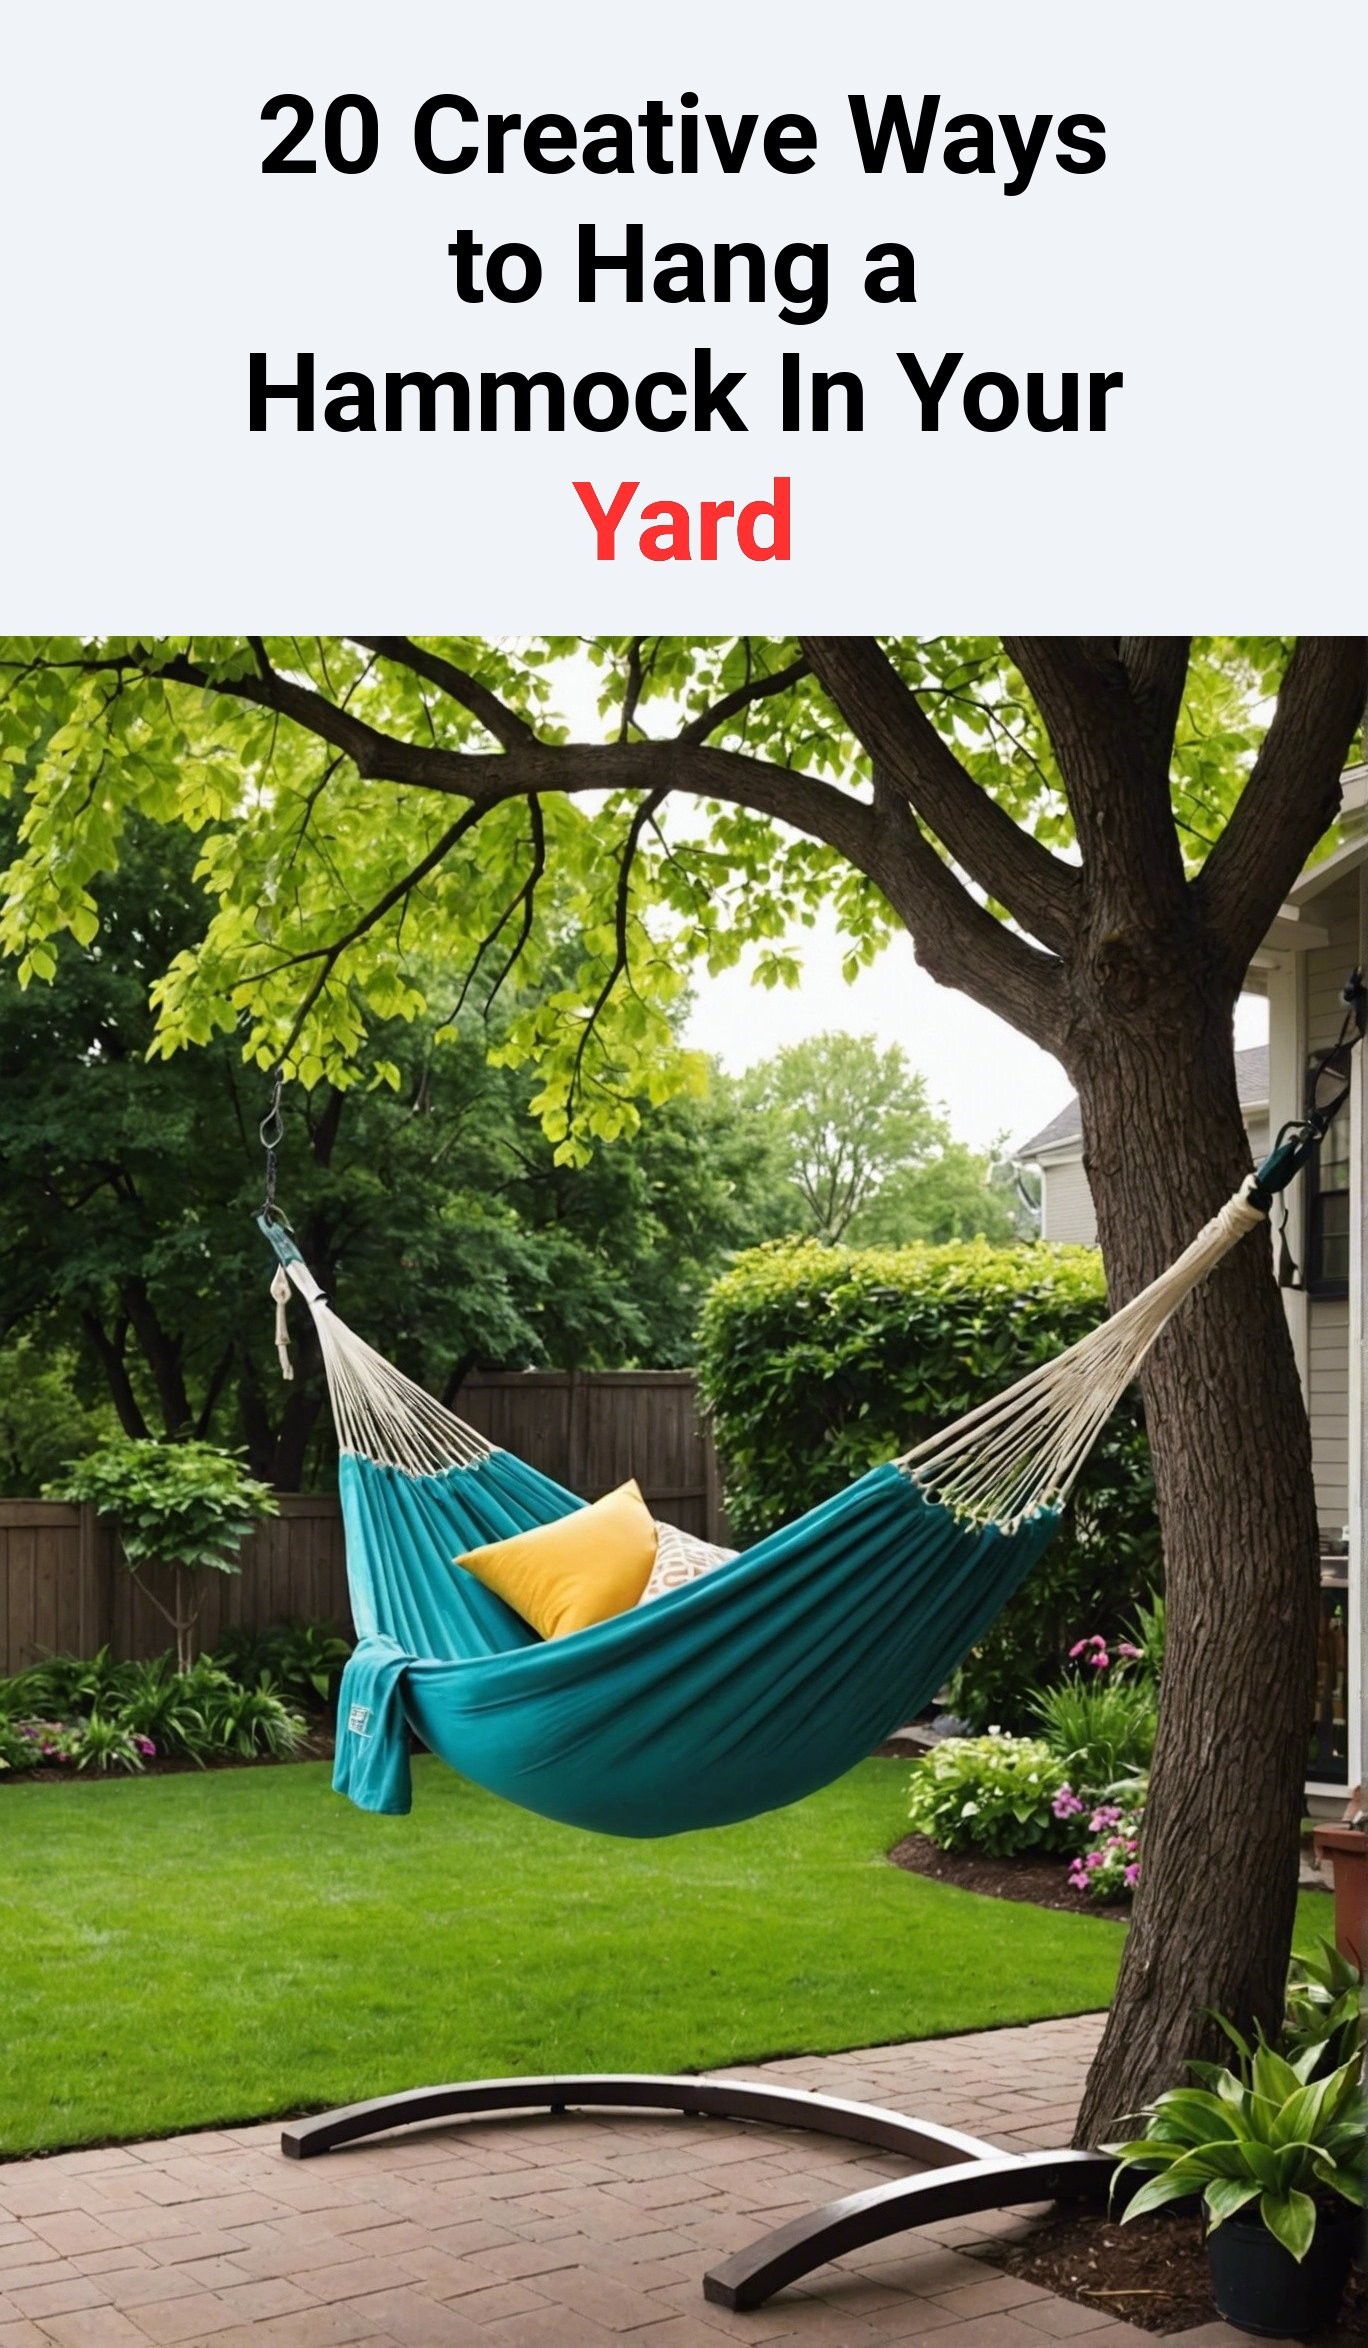 20 Creative Ways to Hang a Hammock In Your Yard